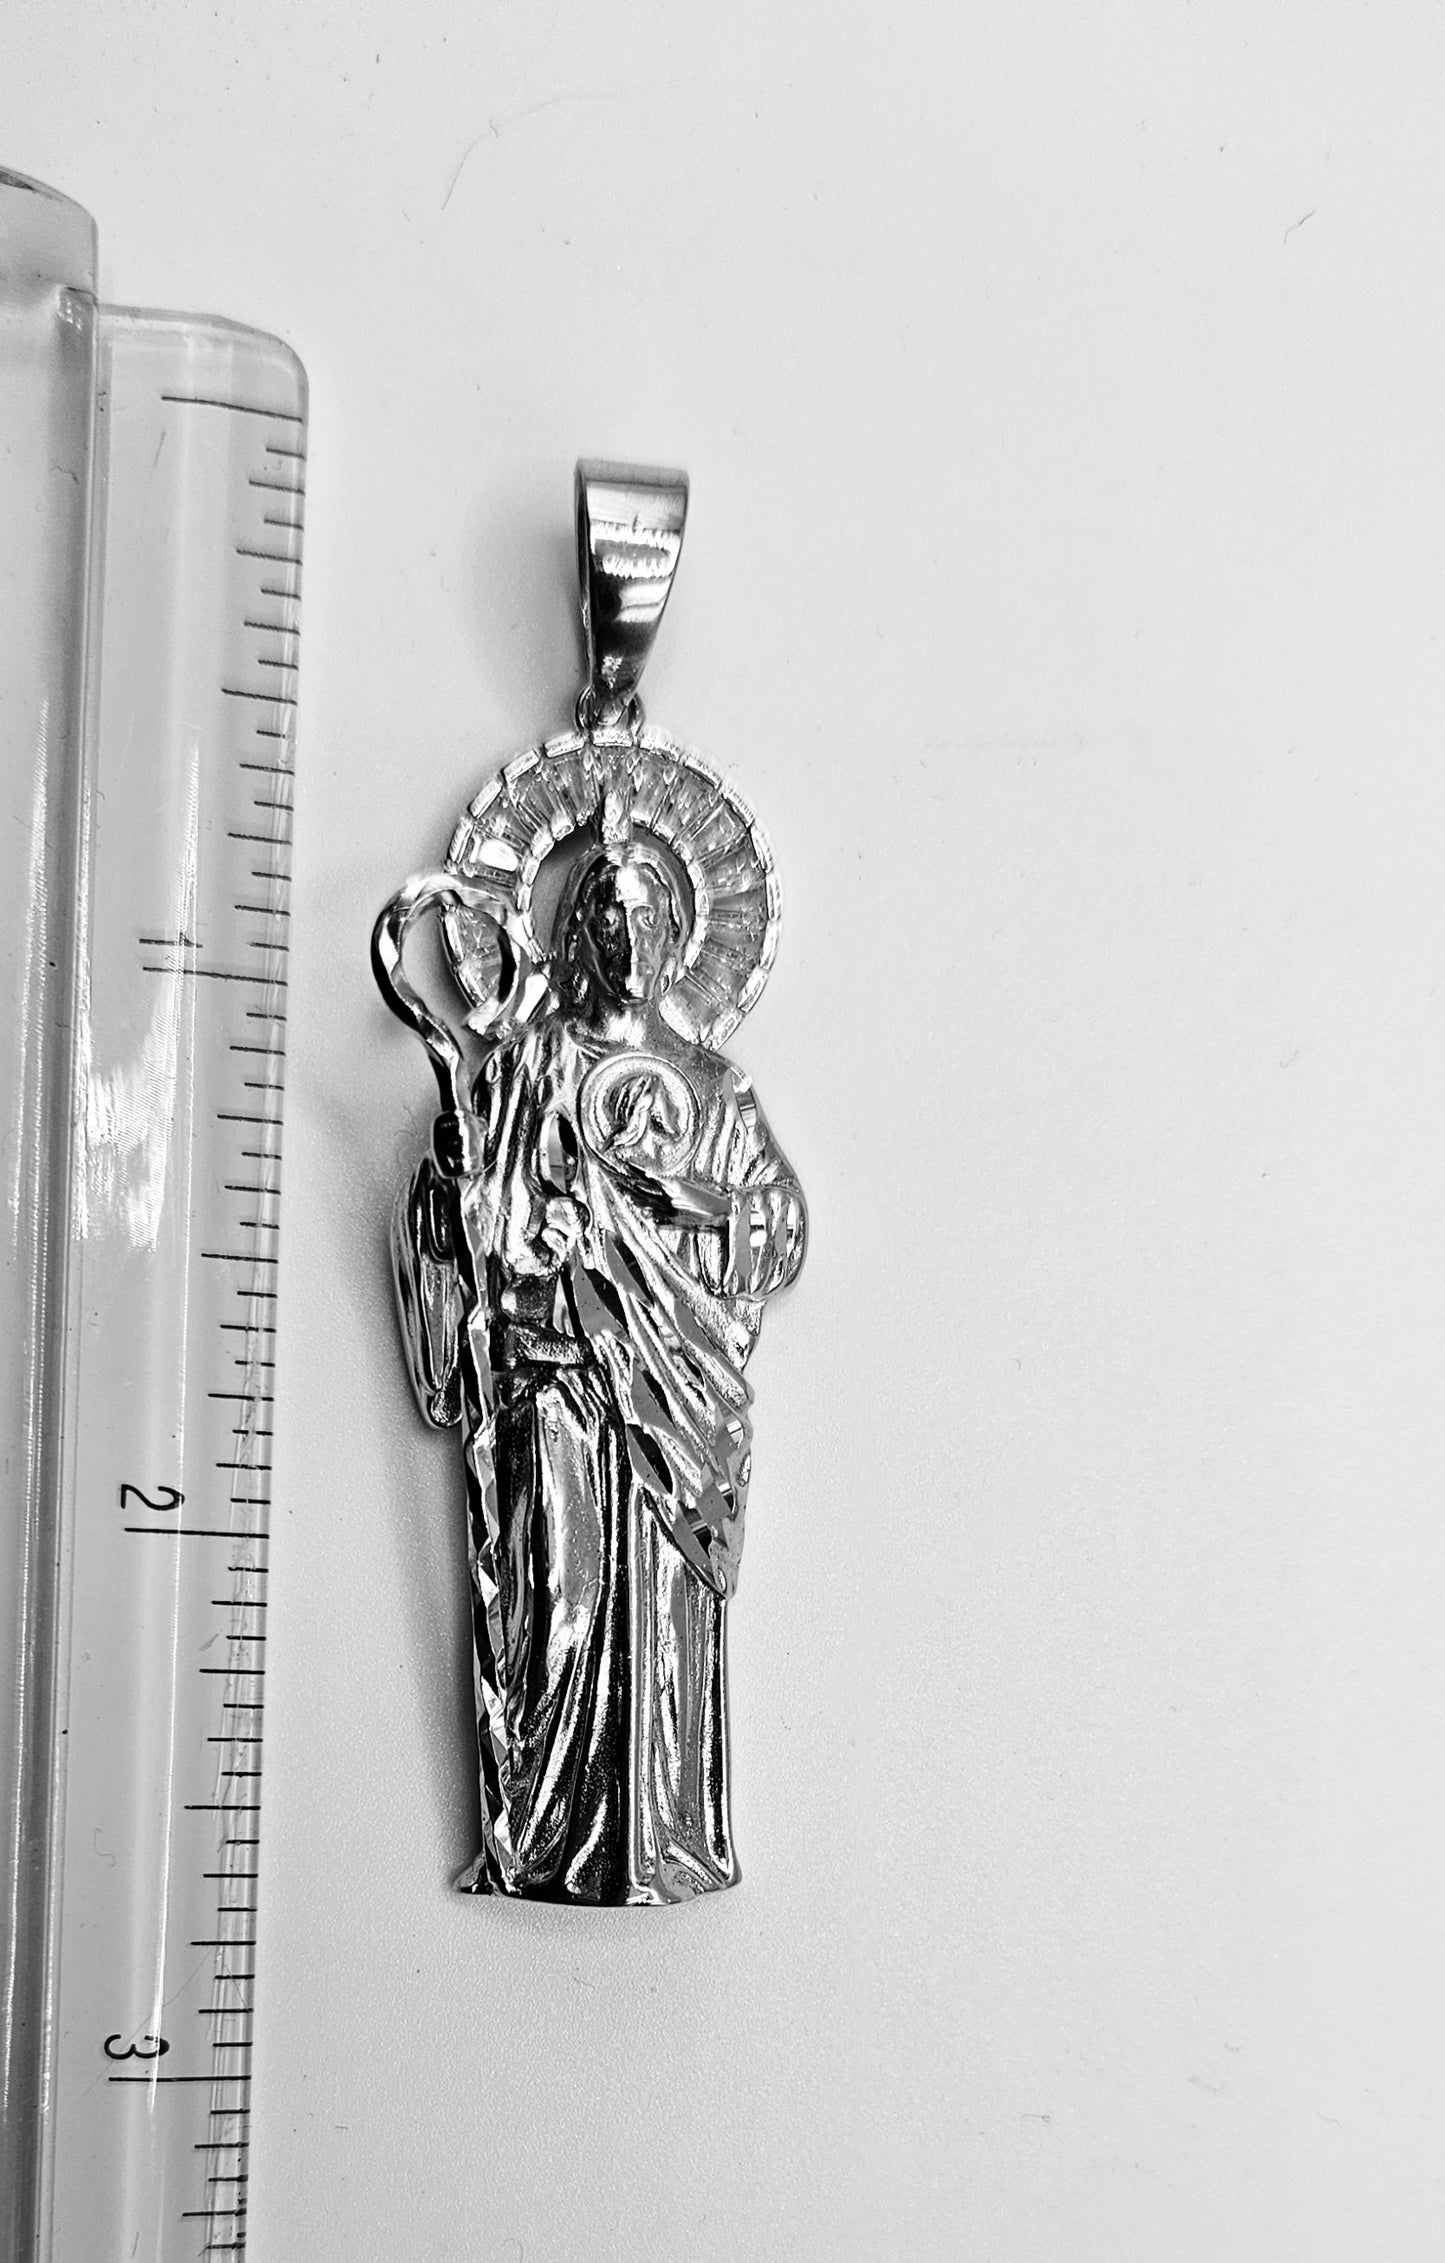 San Judas Silver 925 Pendant